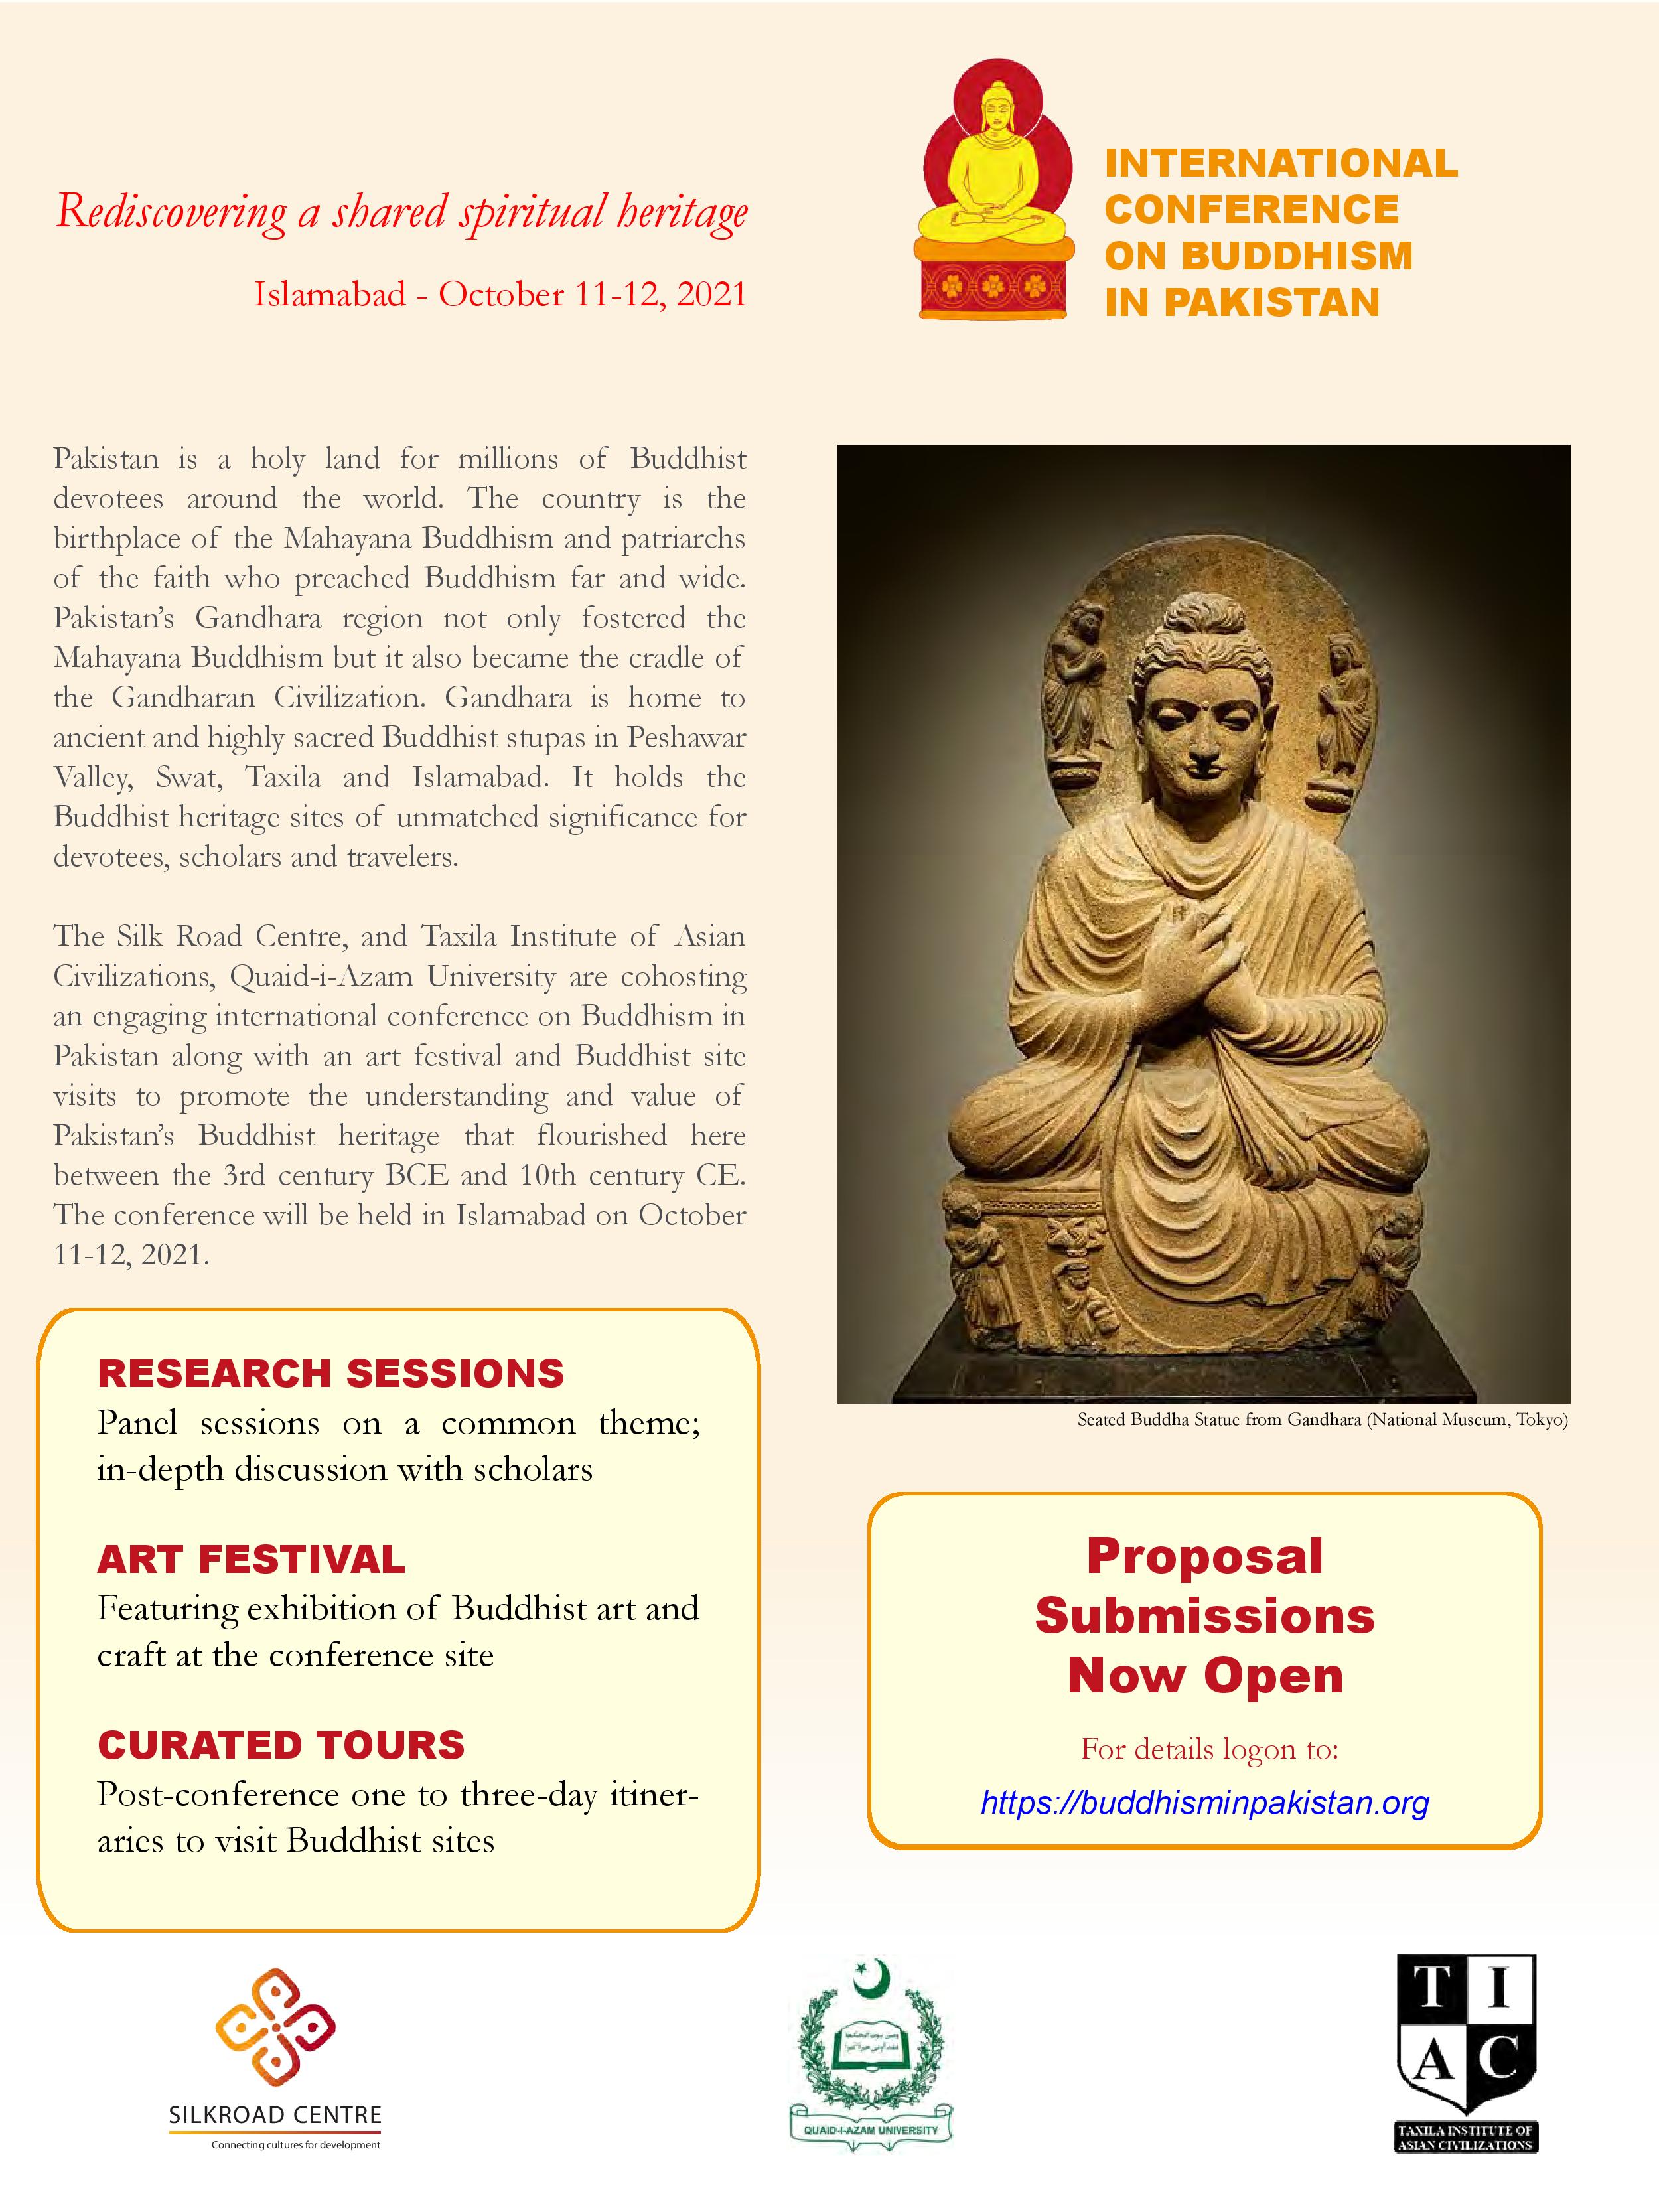 International Conference on Buddhism in Pakistan flyer. Visit buddhisminpakistan.org